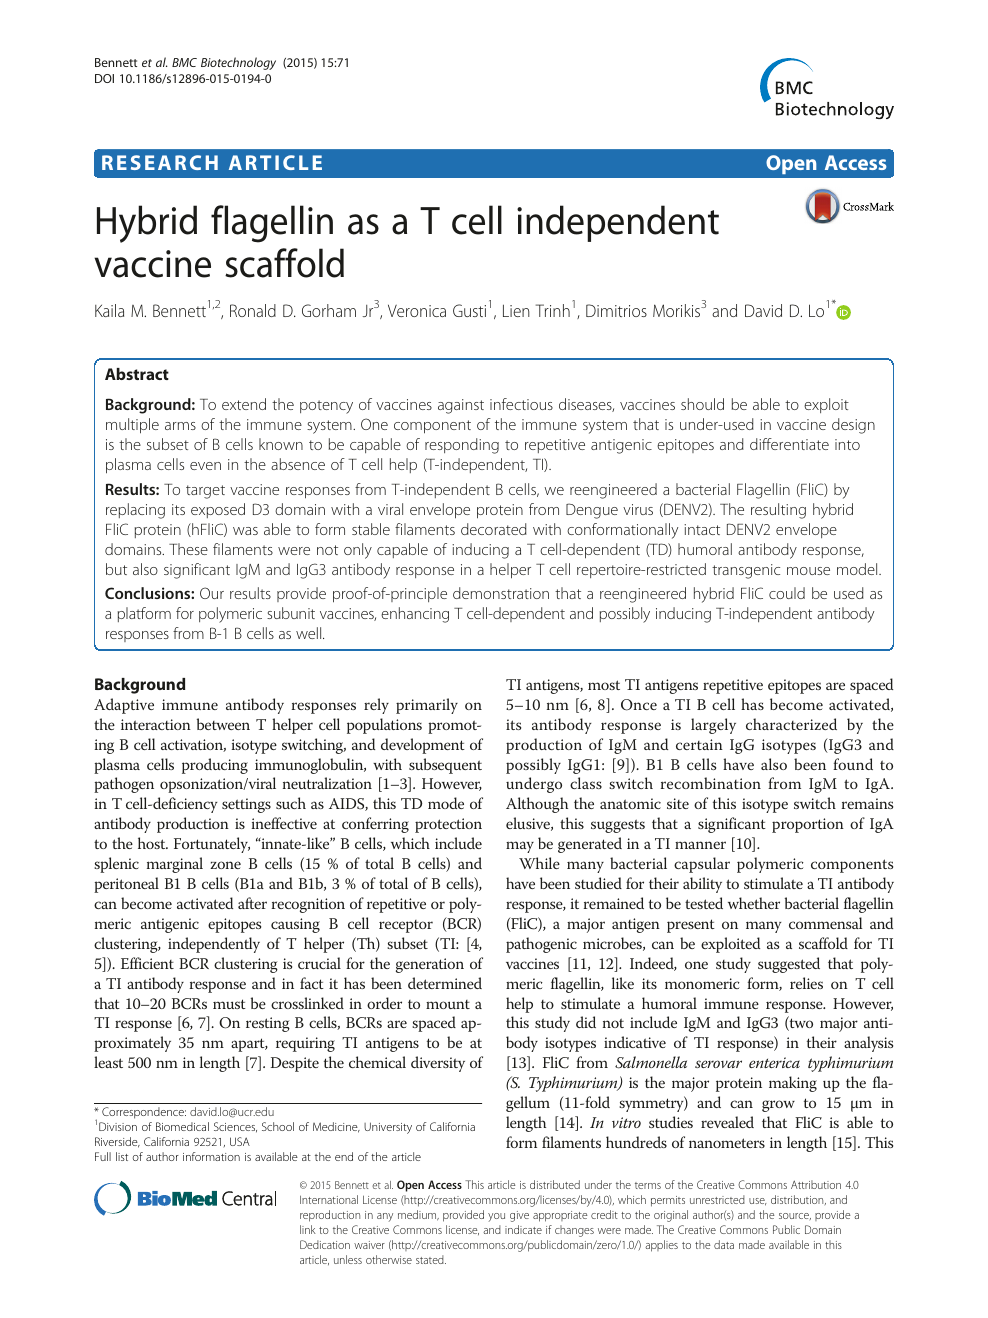 Anti-Flagellin FliC monoclonal IgG antibody